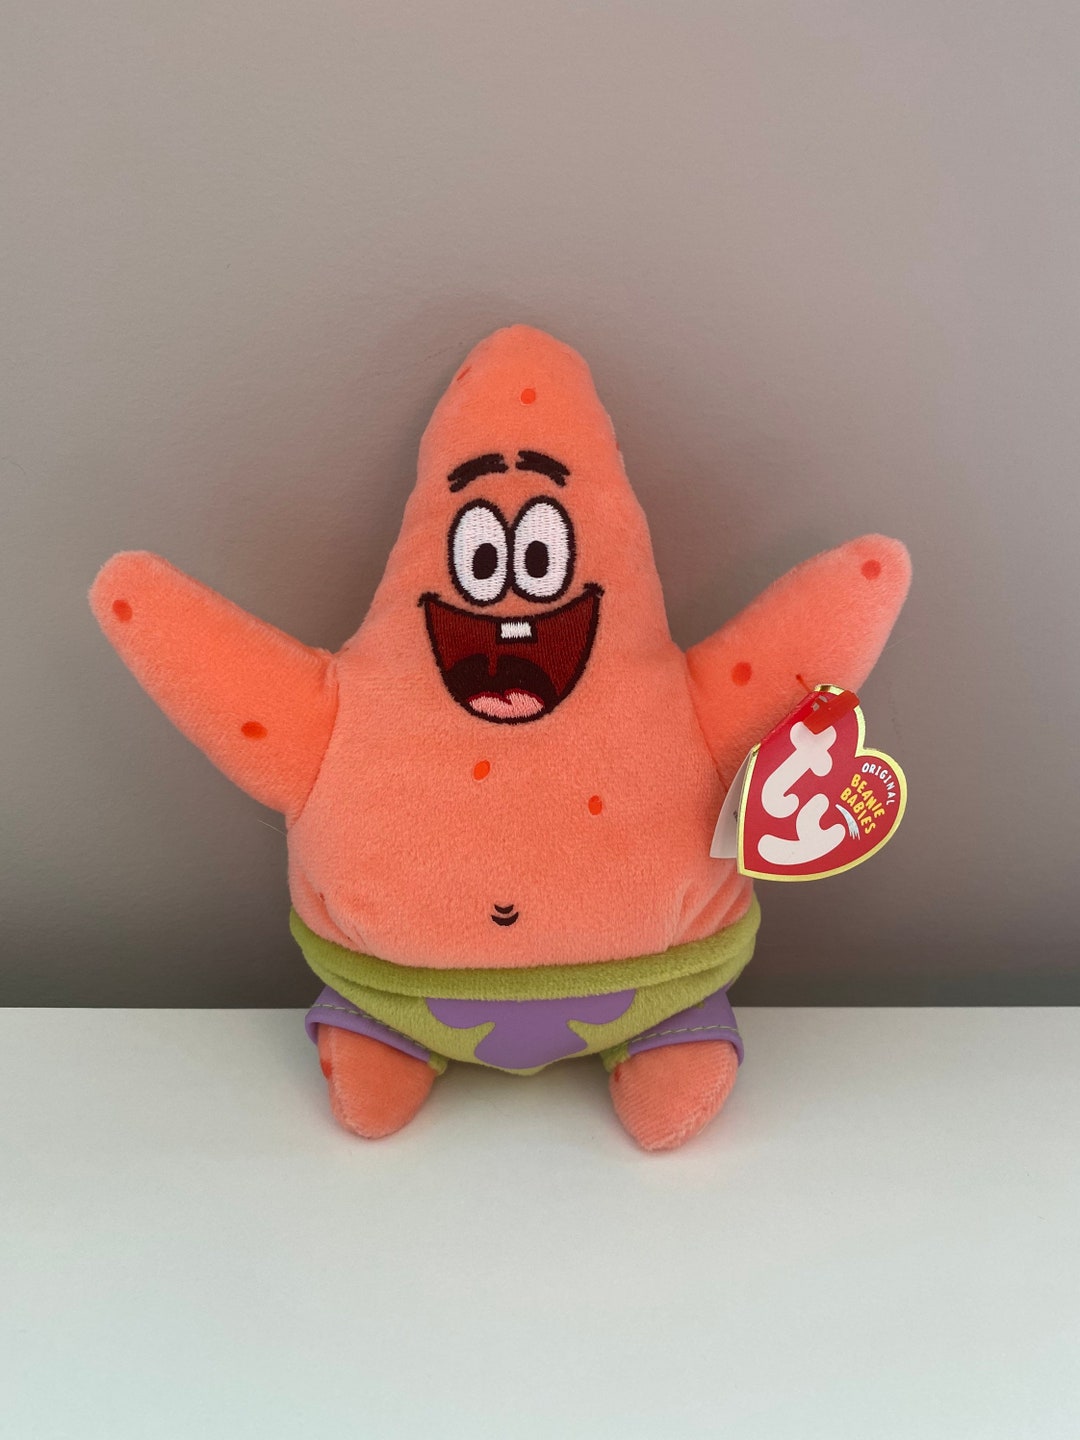 Patrick - Costume Kit in Fall Guys